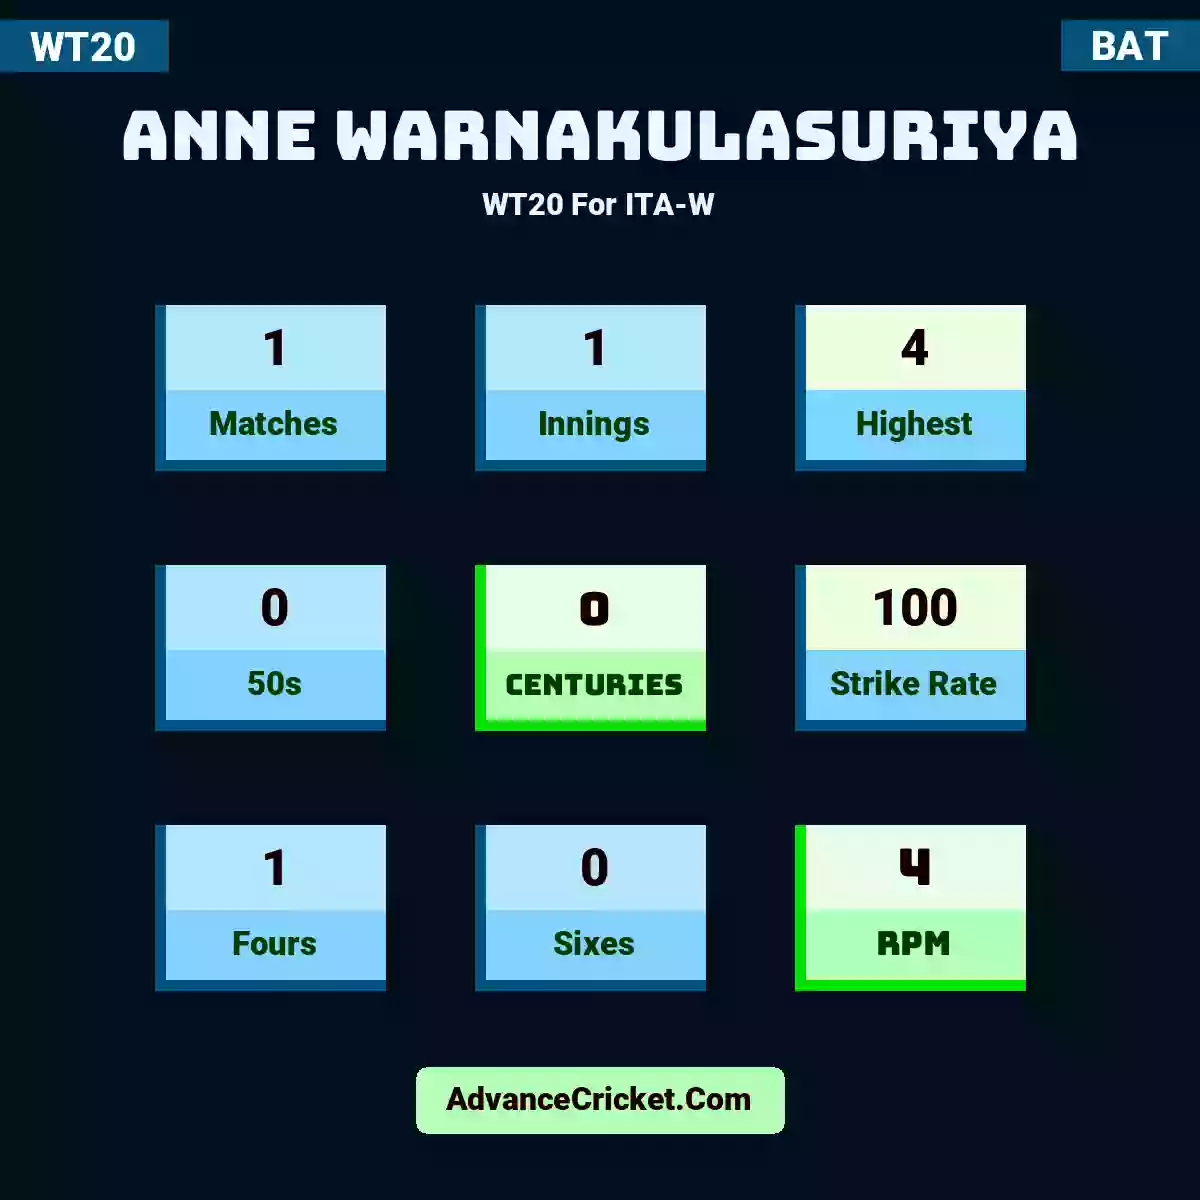 Anne Warnakulasuriya WT20  For ITA-W, Anne Warnakulasuriya played 1 matches, scored 4 runs as highest, 0 half-centuries, and 0 centuries, with a strike rate of 100. A.Warnakulasuriya hit 1 fours and 0 sixes, with an RPM of 4.